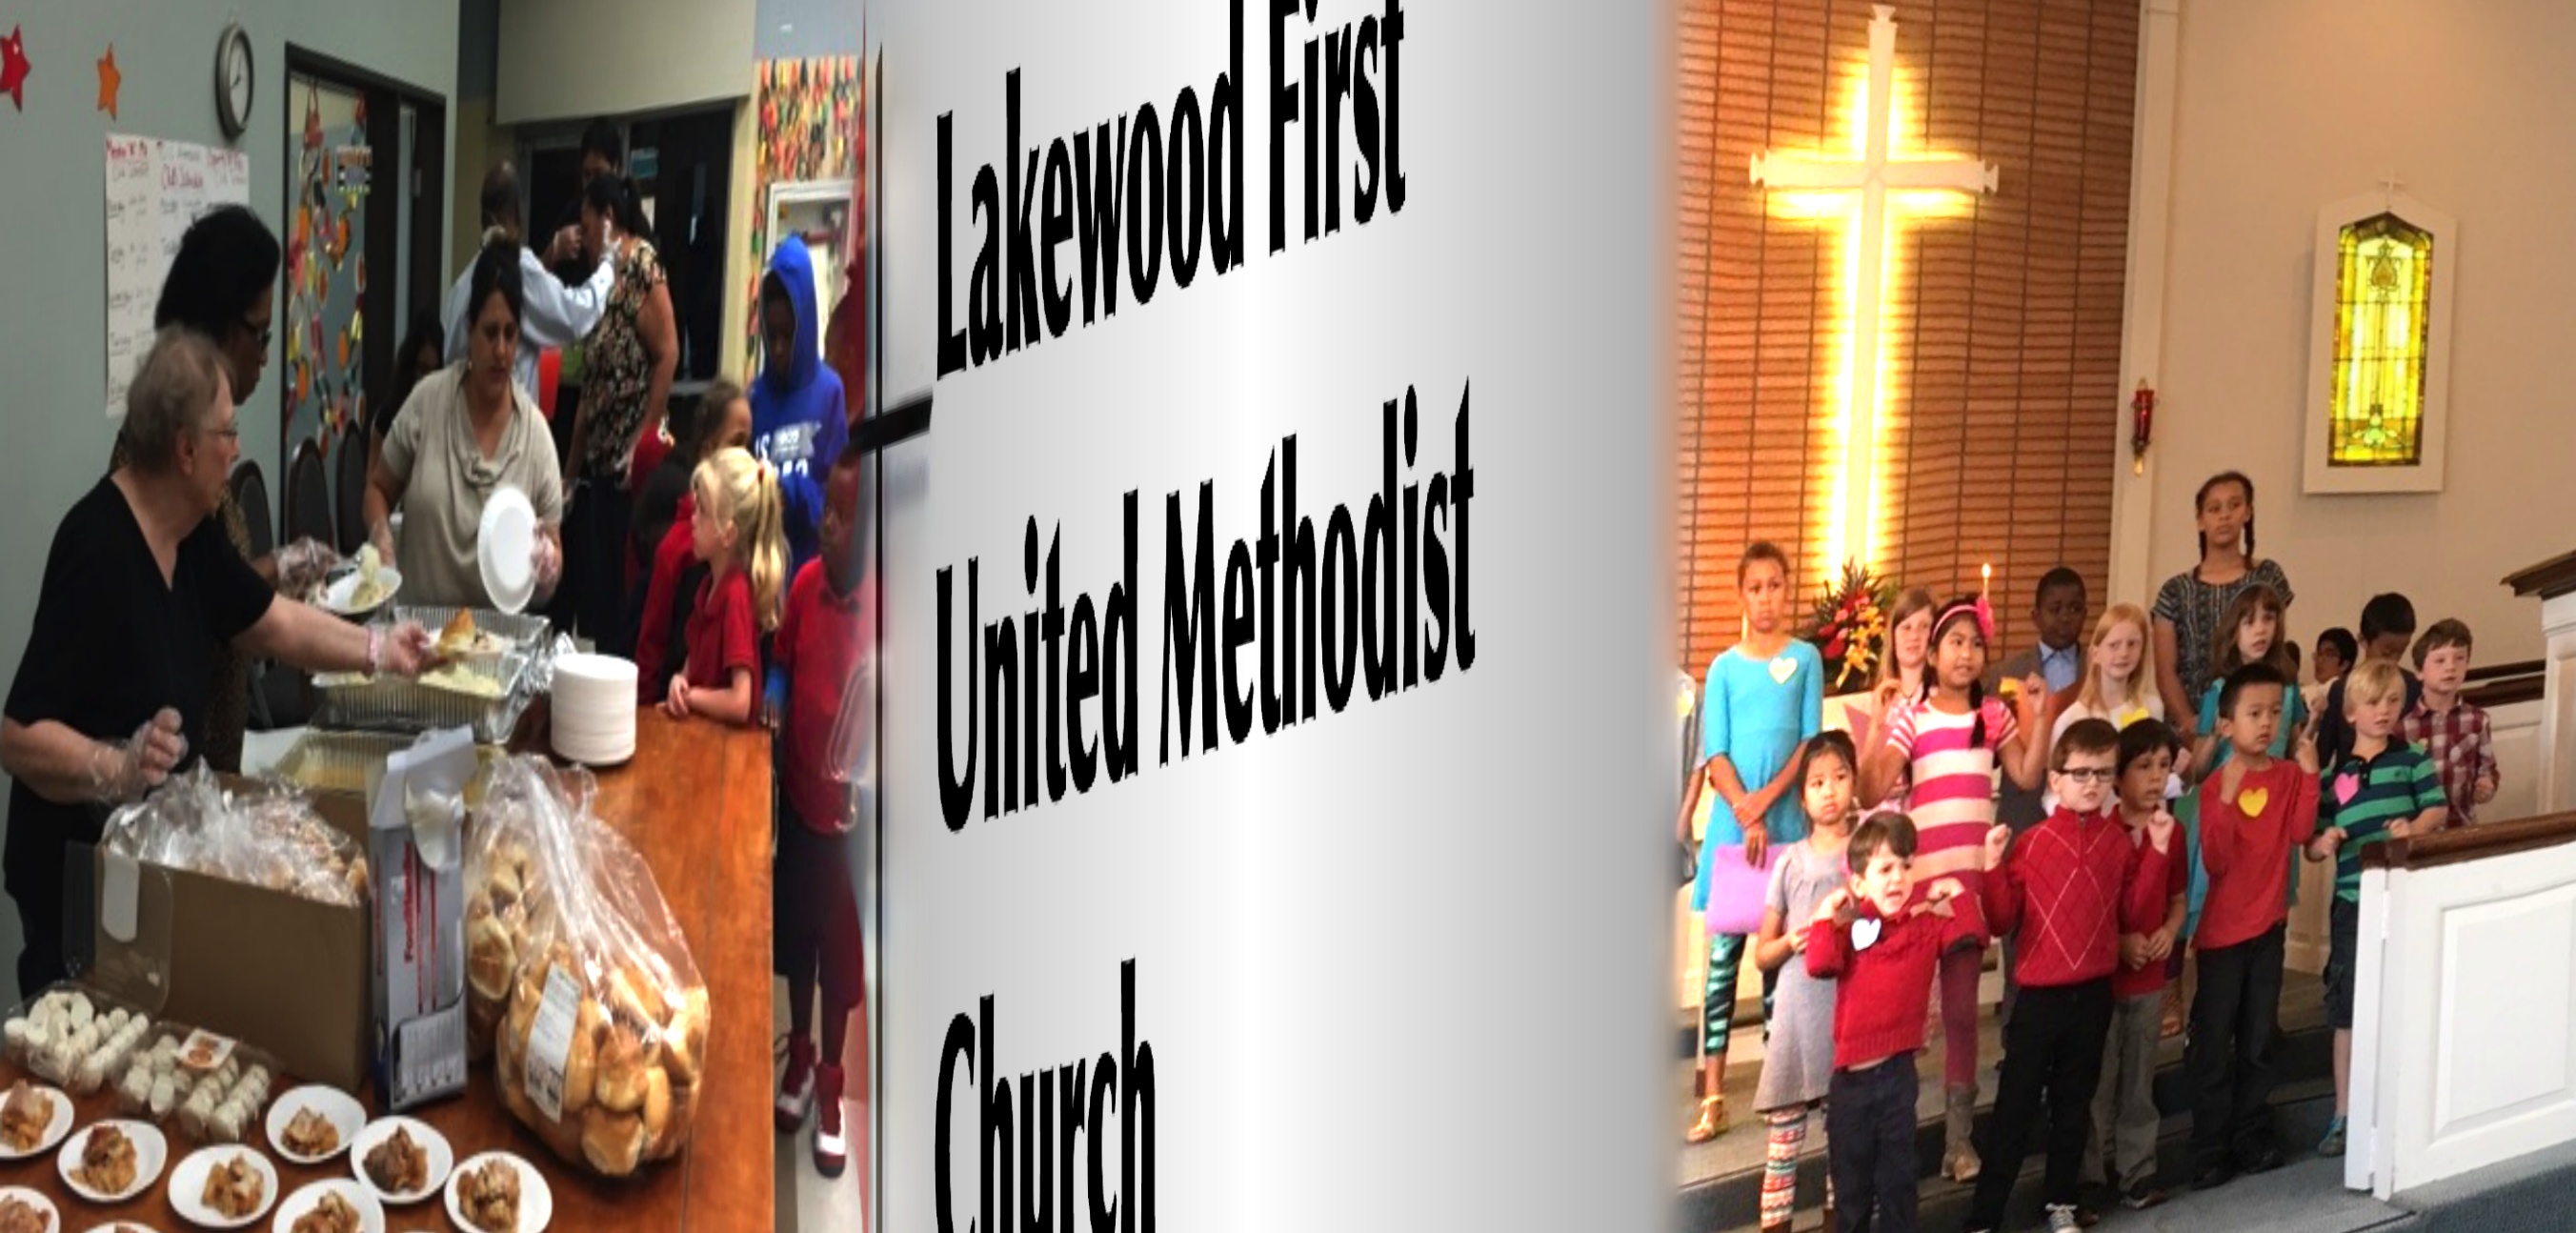 Lakewood First United Methodist Church